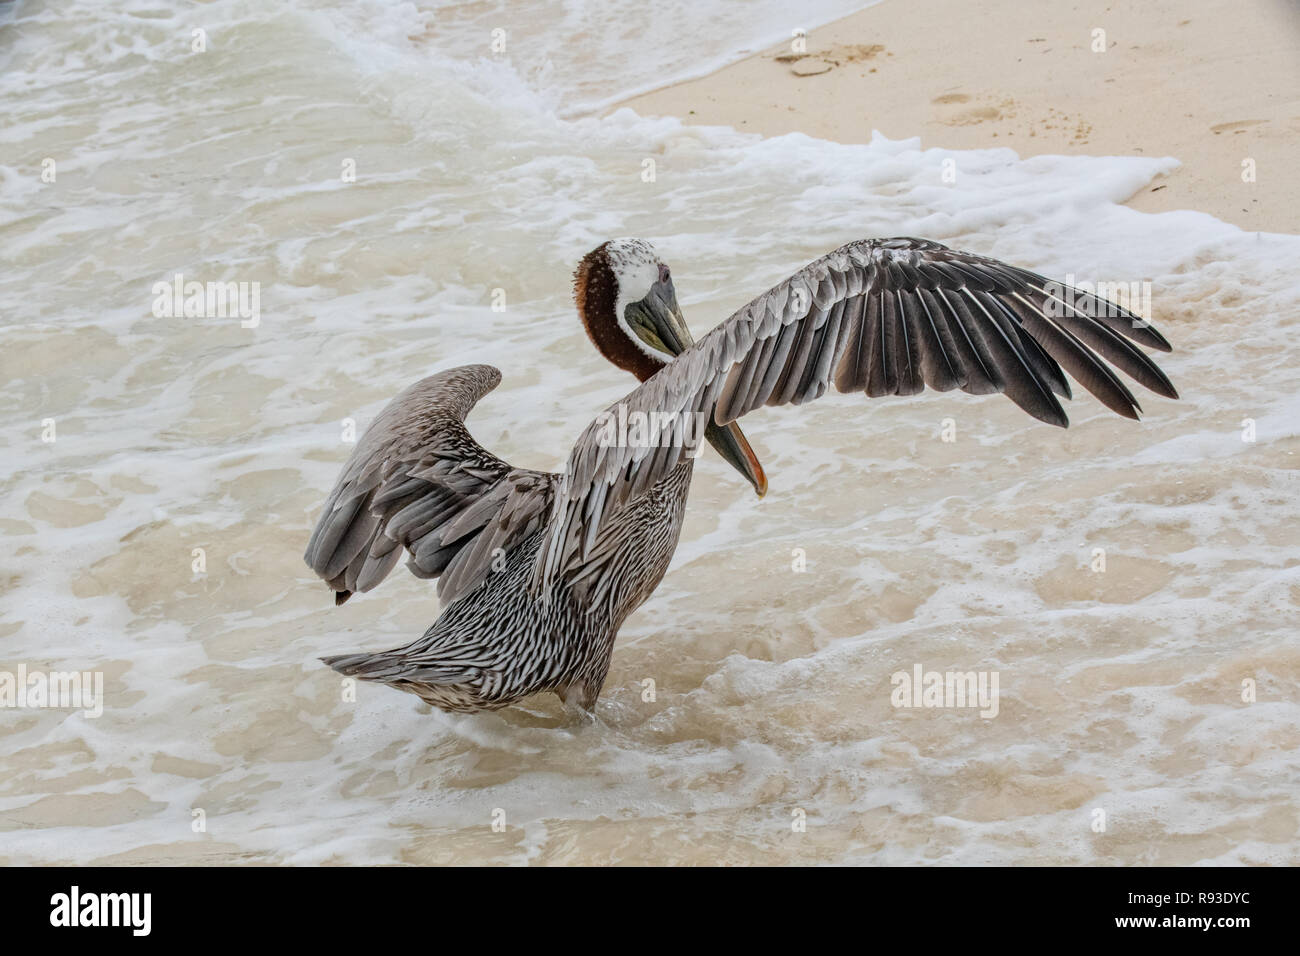 Pelikan Braun - Pelikan, Pelecanus occidentalis / pelecanidae Wasser Vogel w/große Schnabel - Hals Tasche in Aruba / Karibik Insel - Coastal Sea Bird Stockfoto